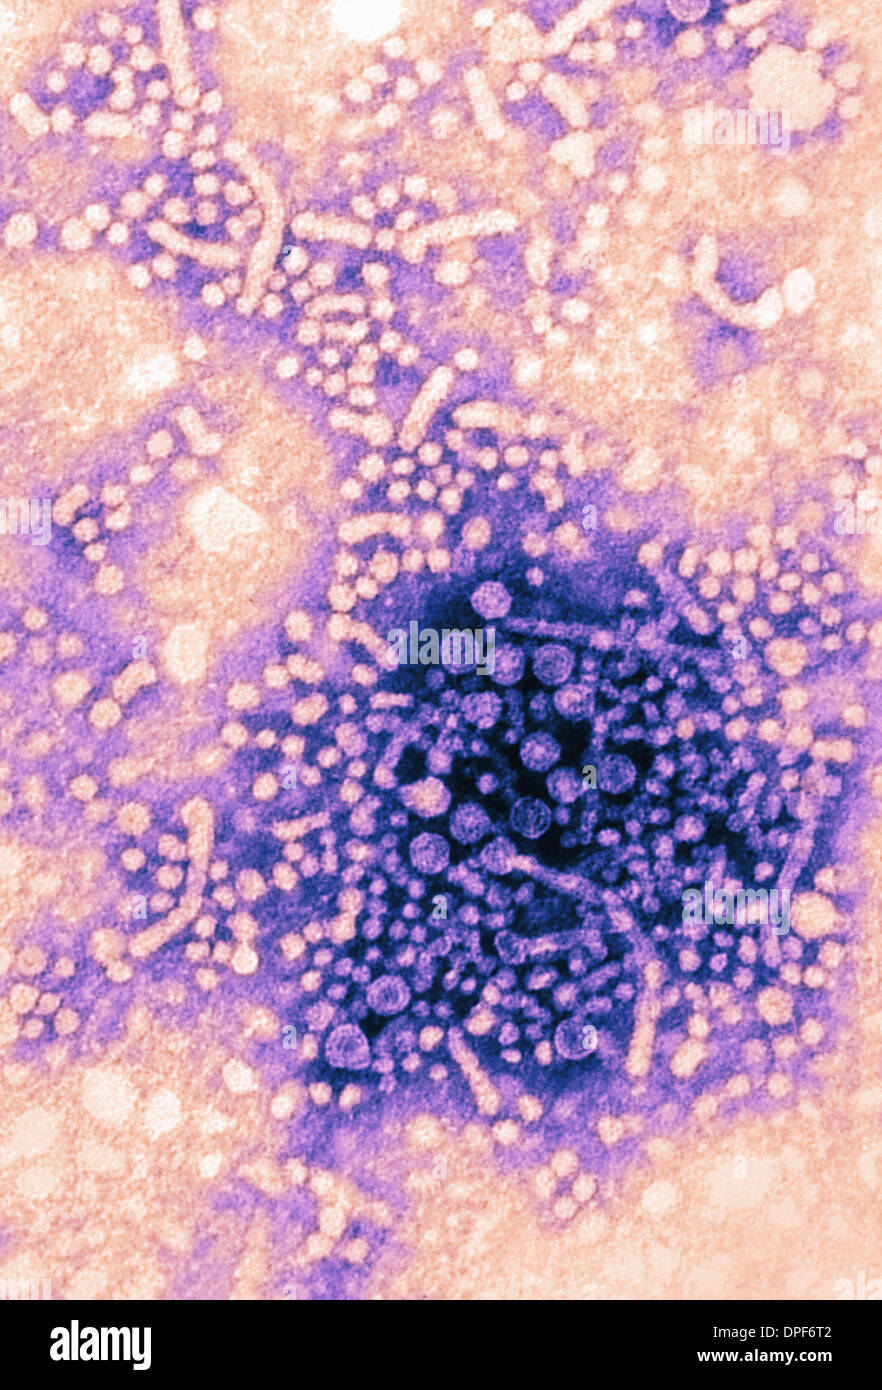 TEM mit Hepatitis B Virus-Partikel Stockfoto